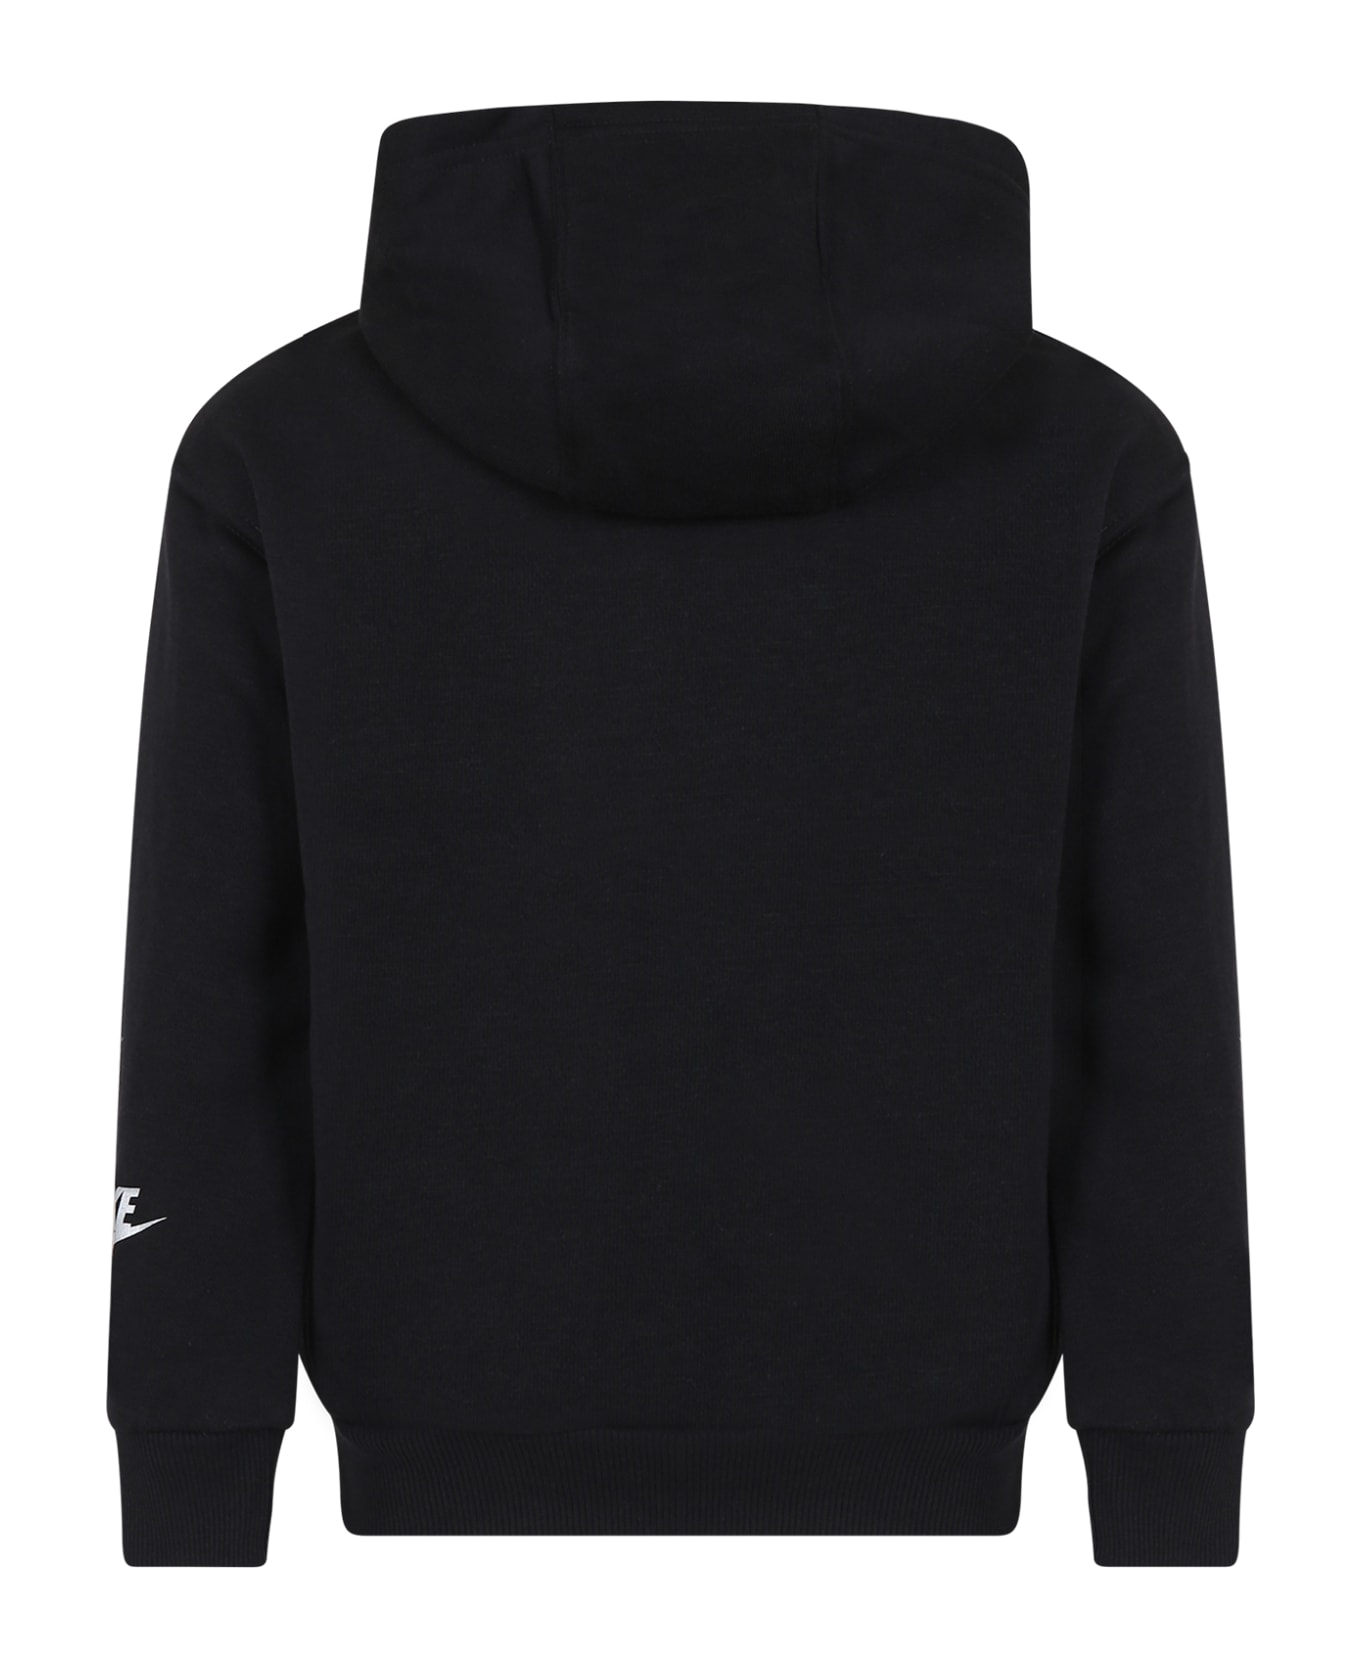 Nike Black Sweatshirt For Kids With Logo - Black